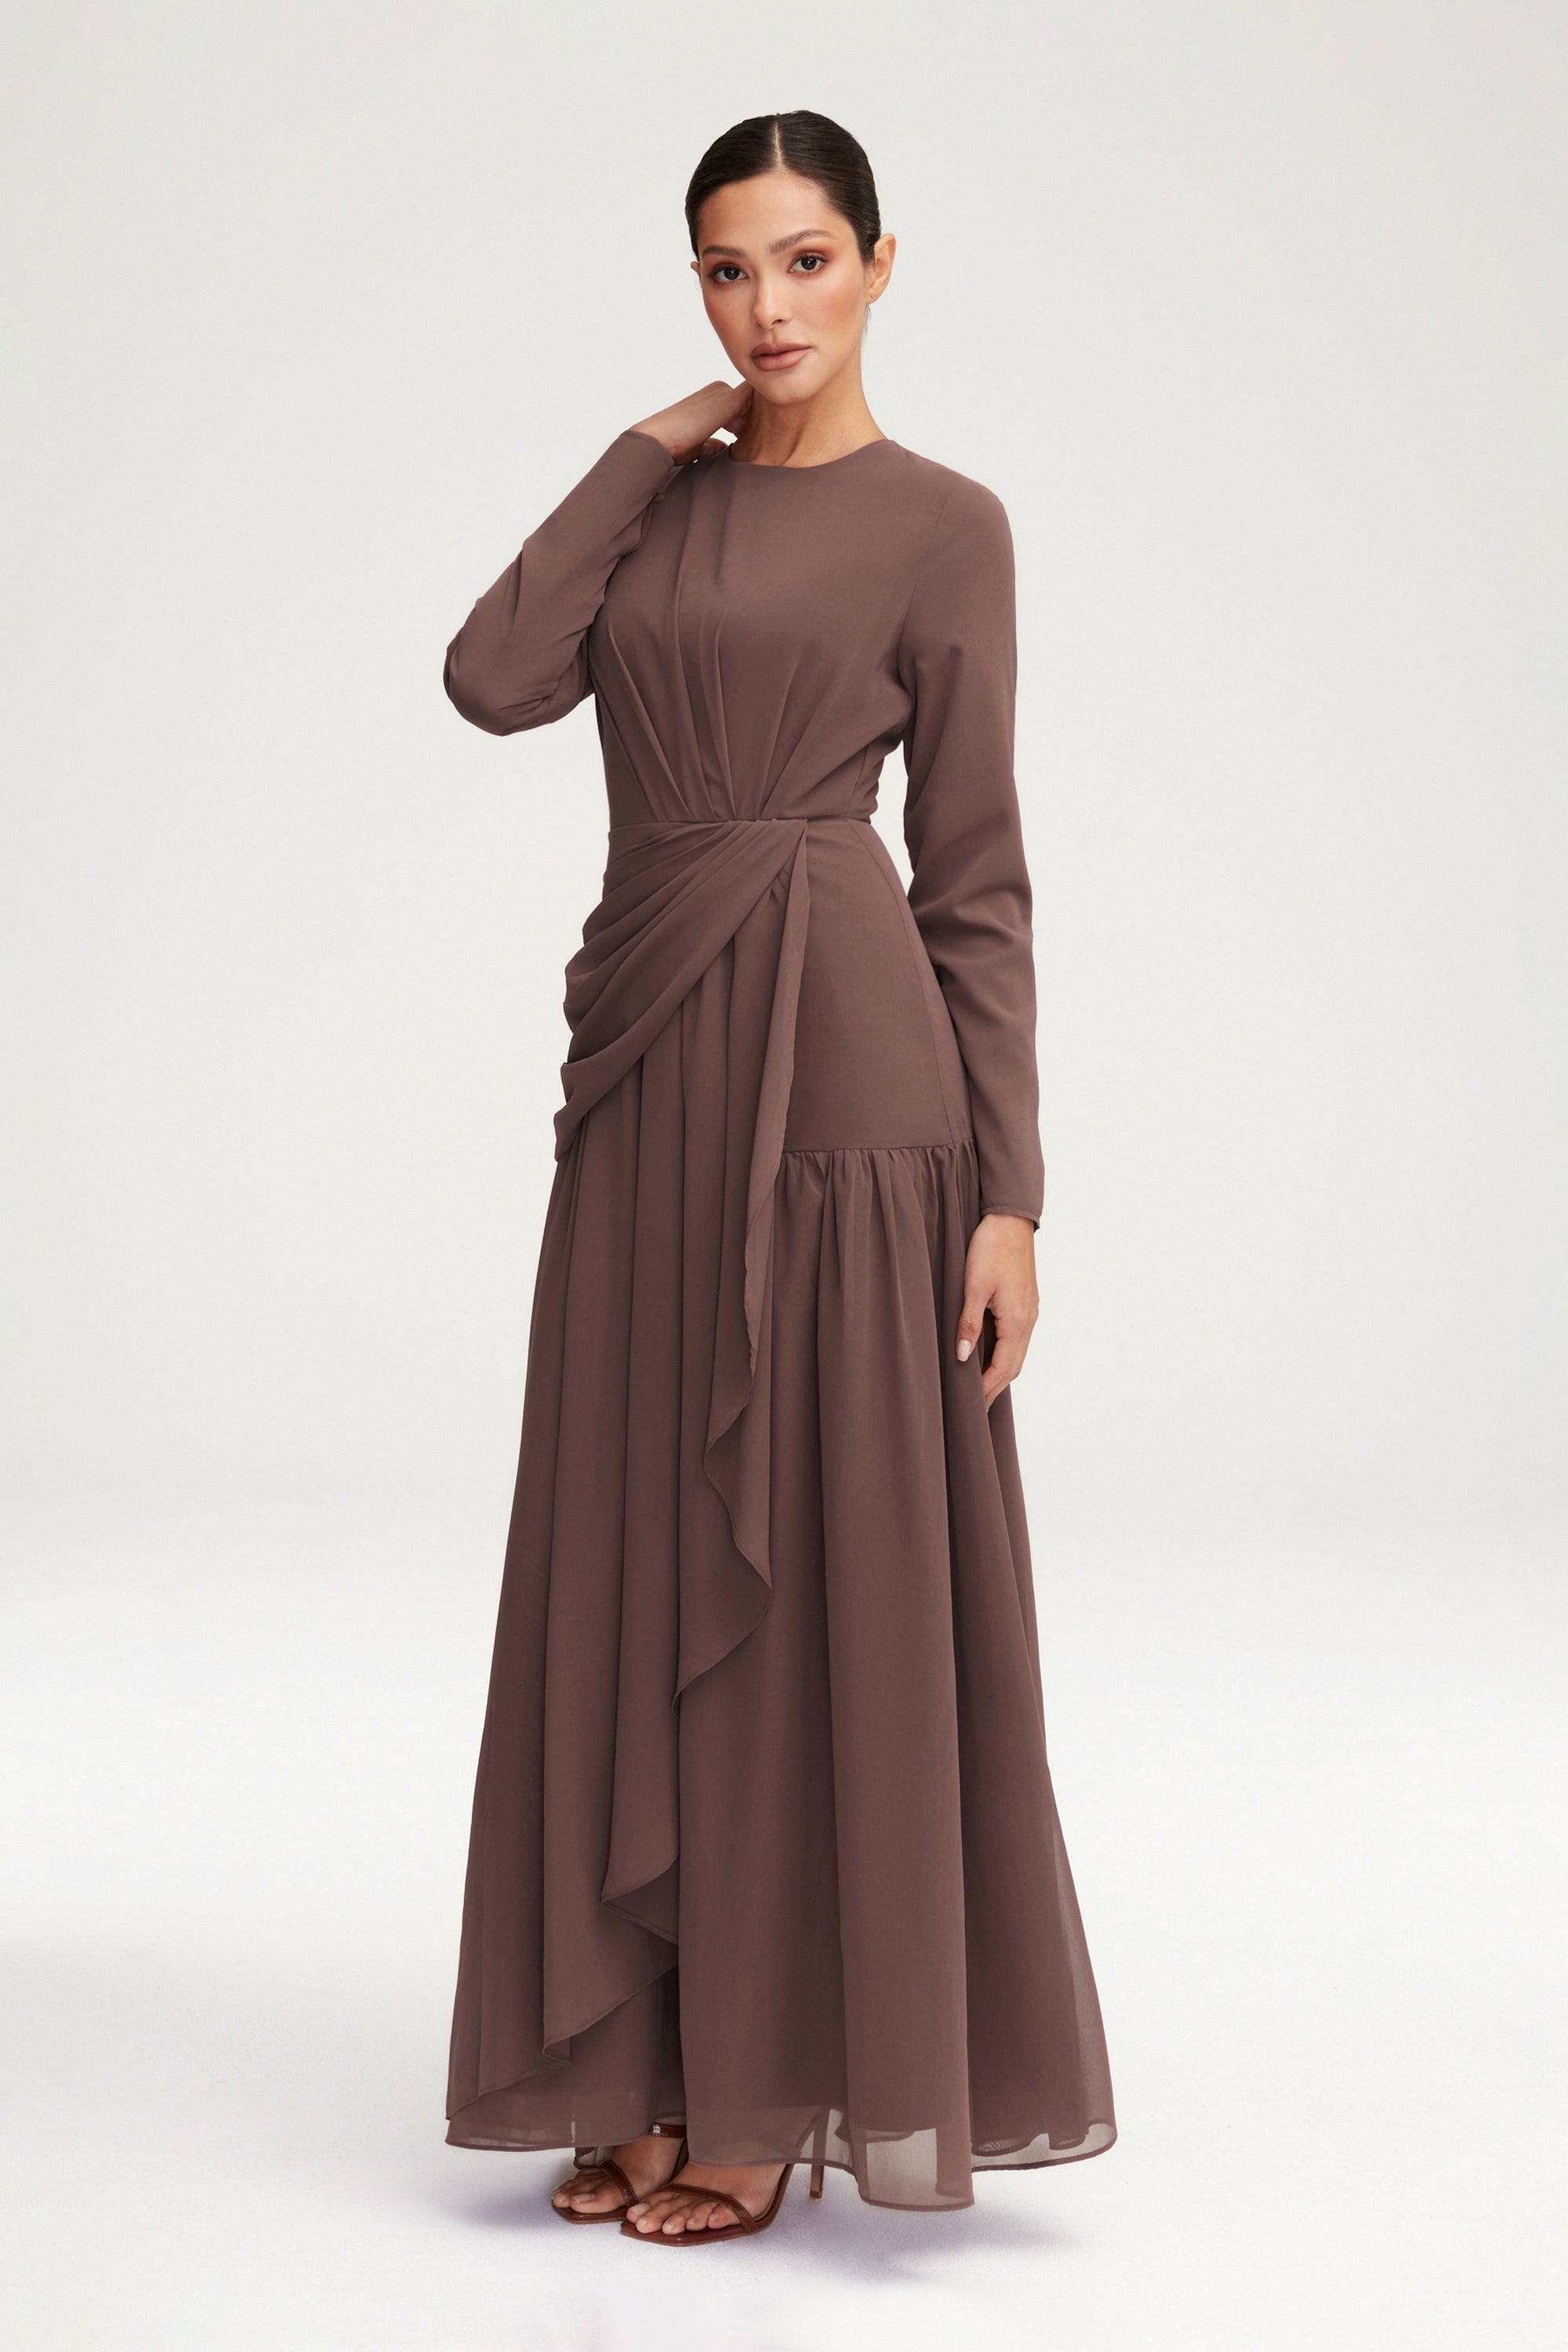 Huda Chiffon Maxi Dress - Taupe Clothing Veiled 